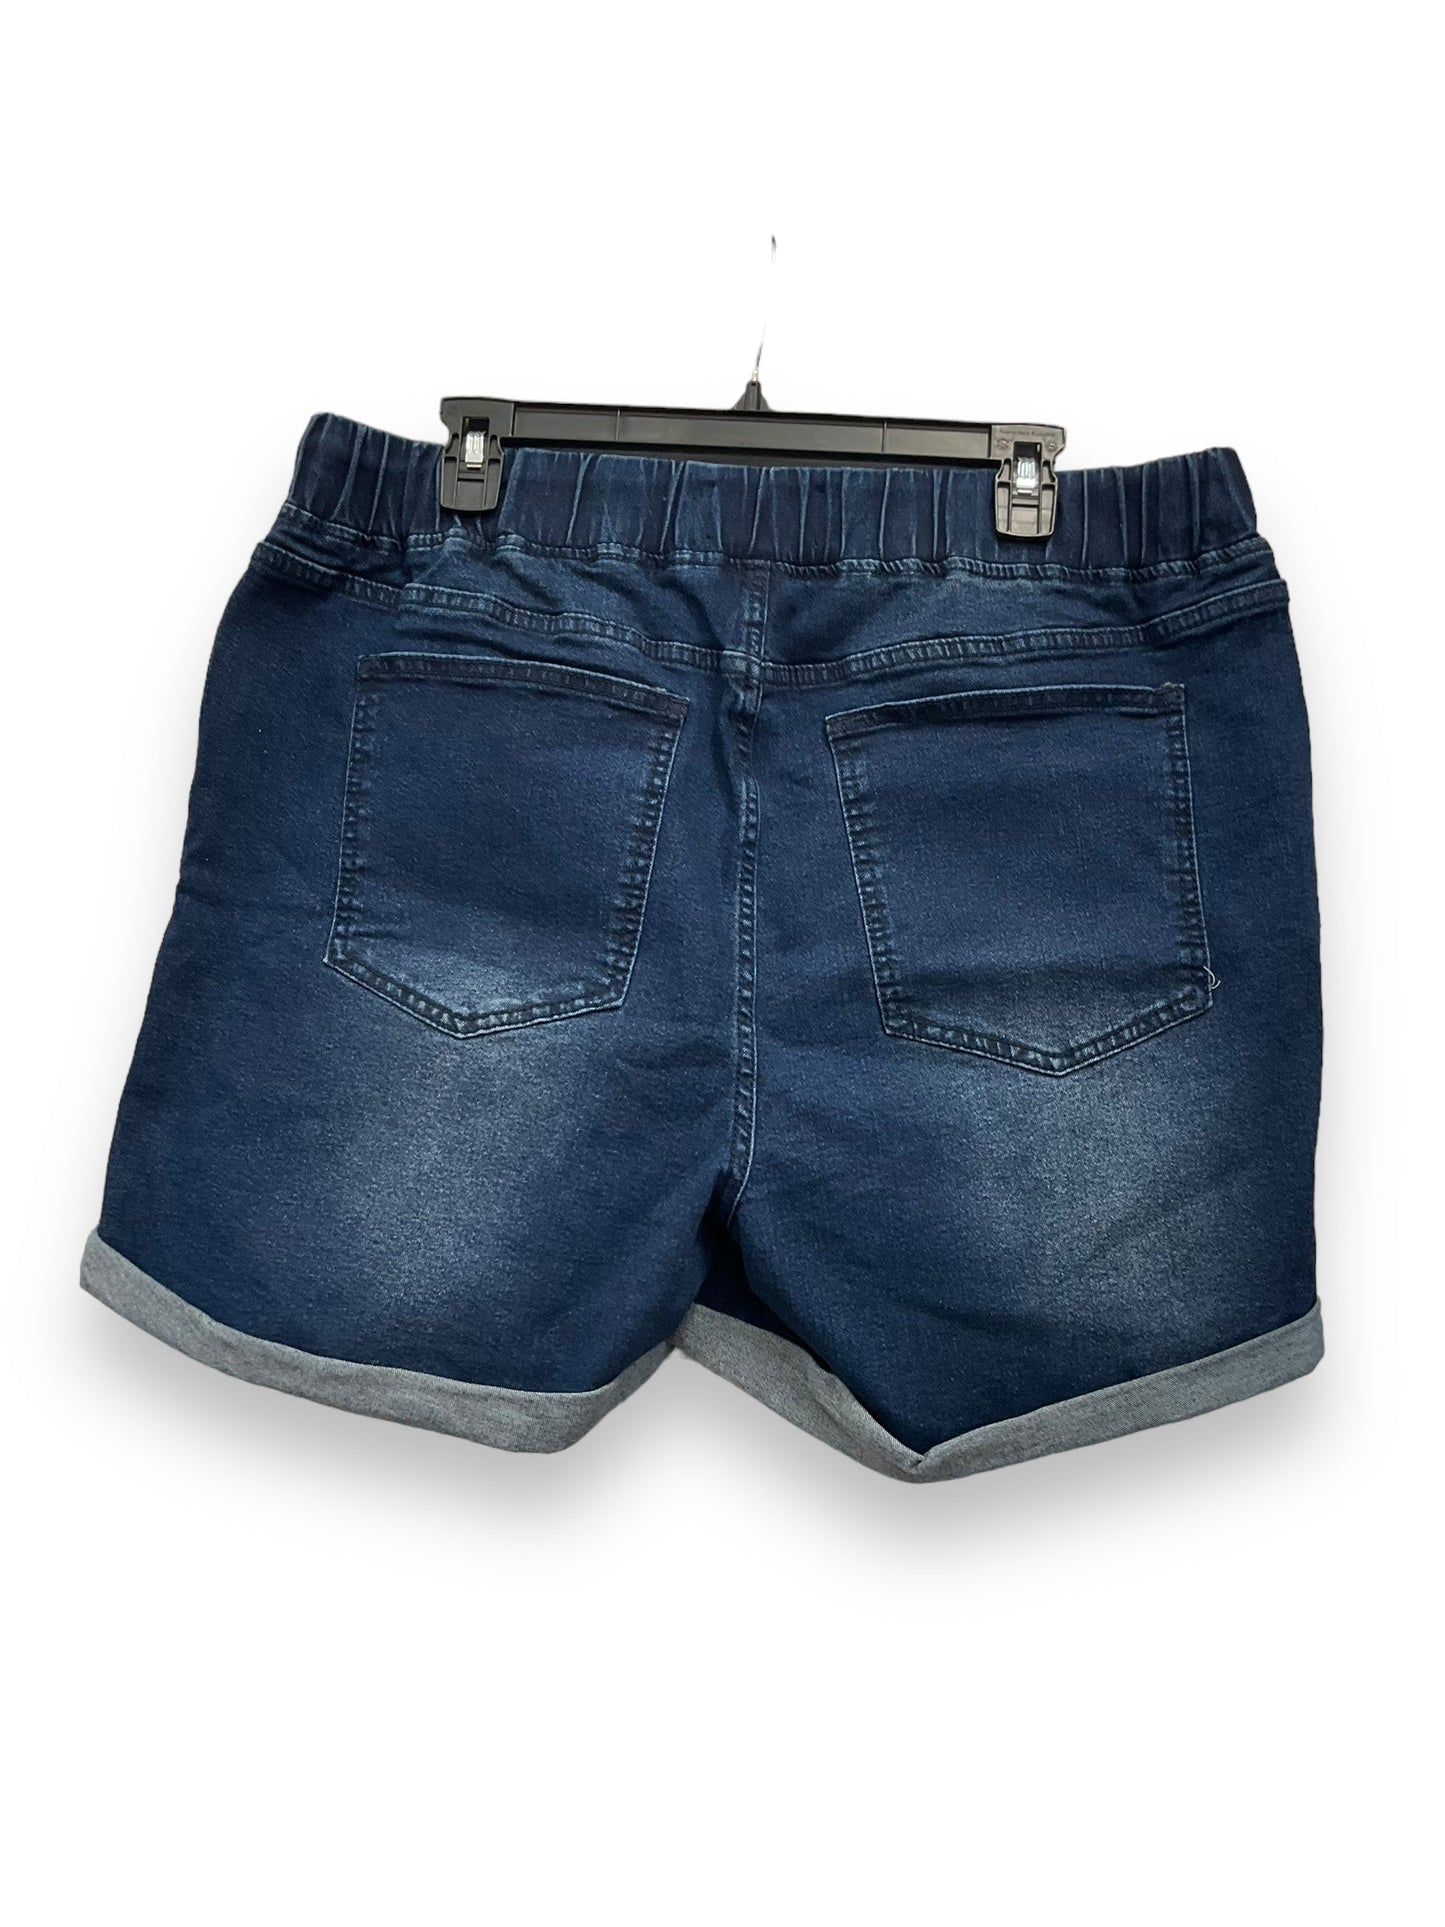 Blue Denim Shorts Clothes Mentor, Size 1x